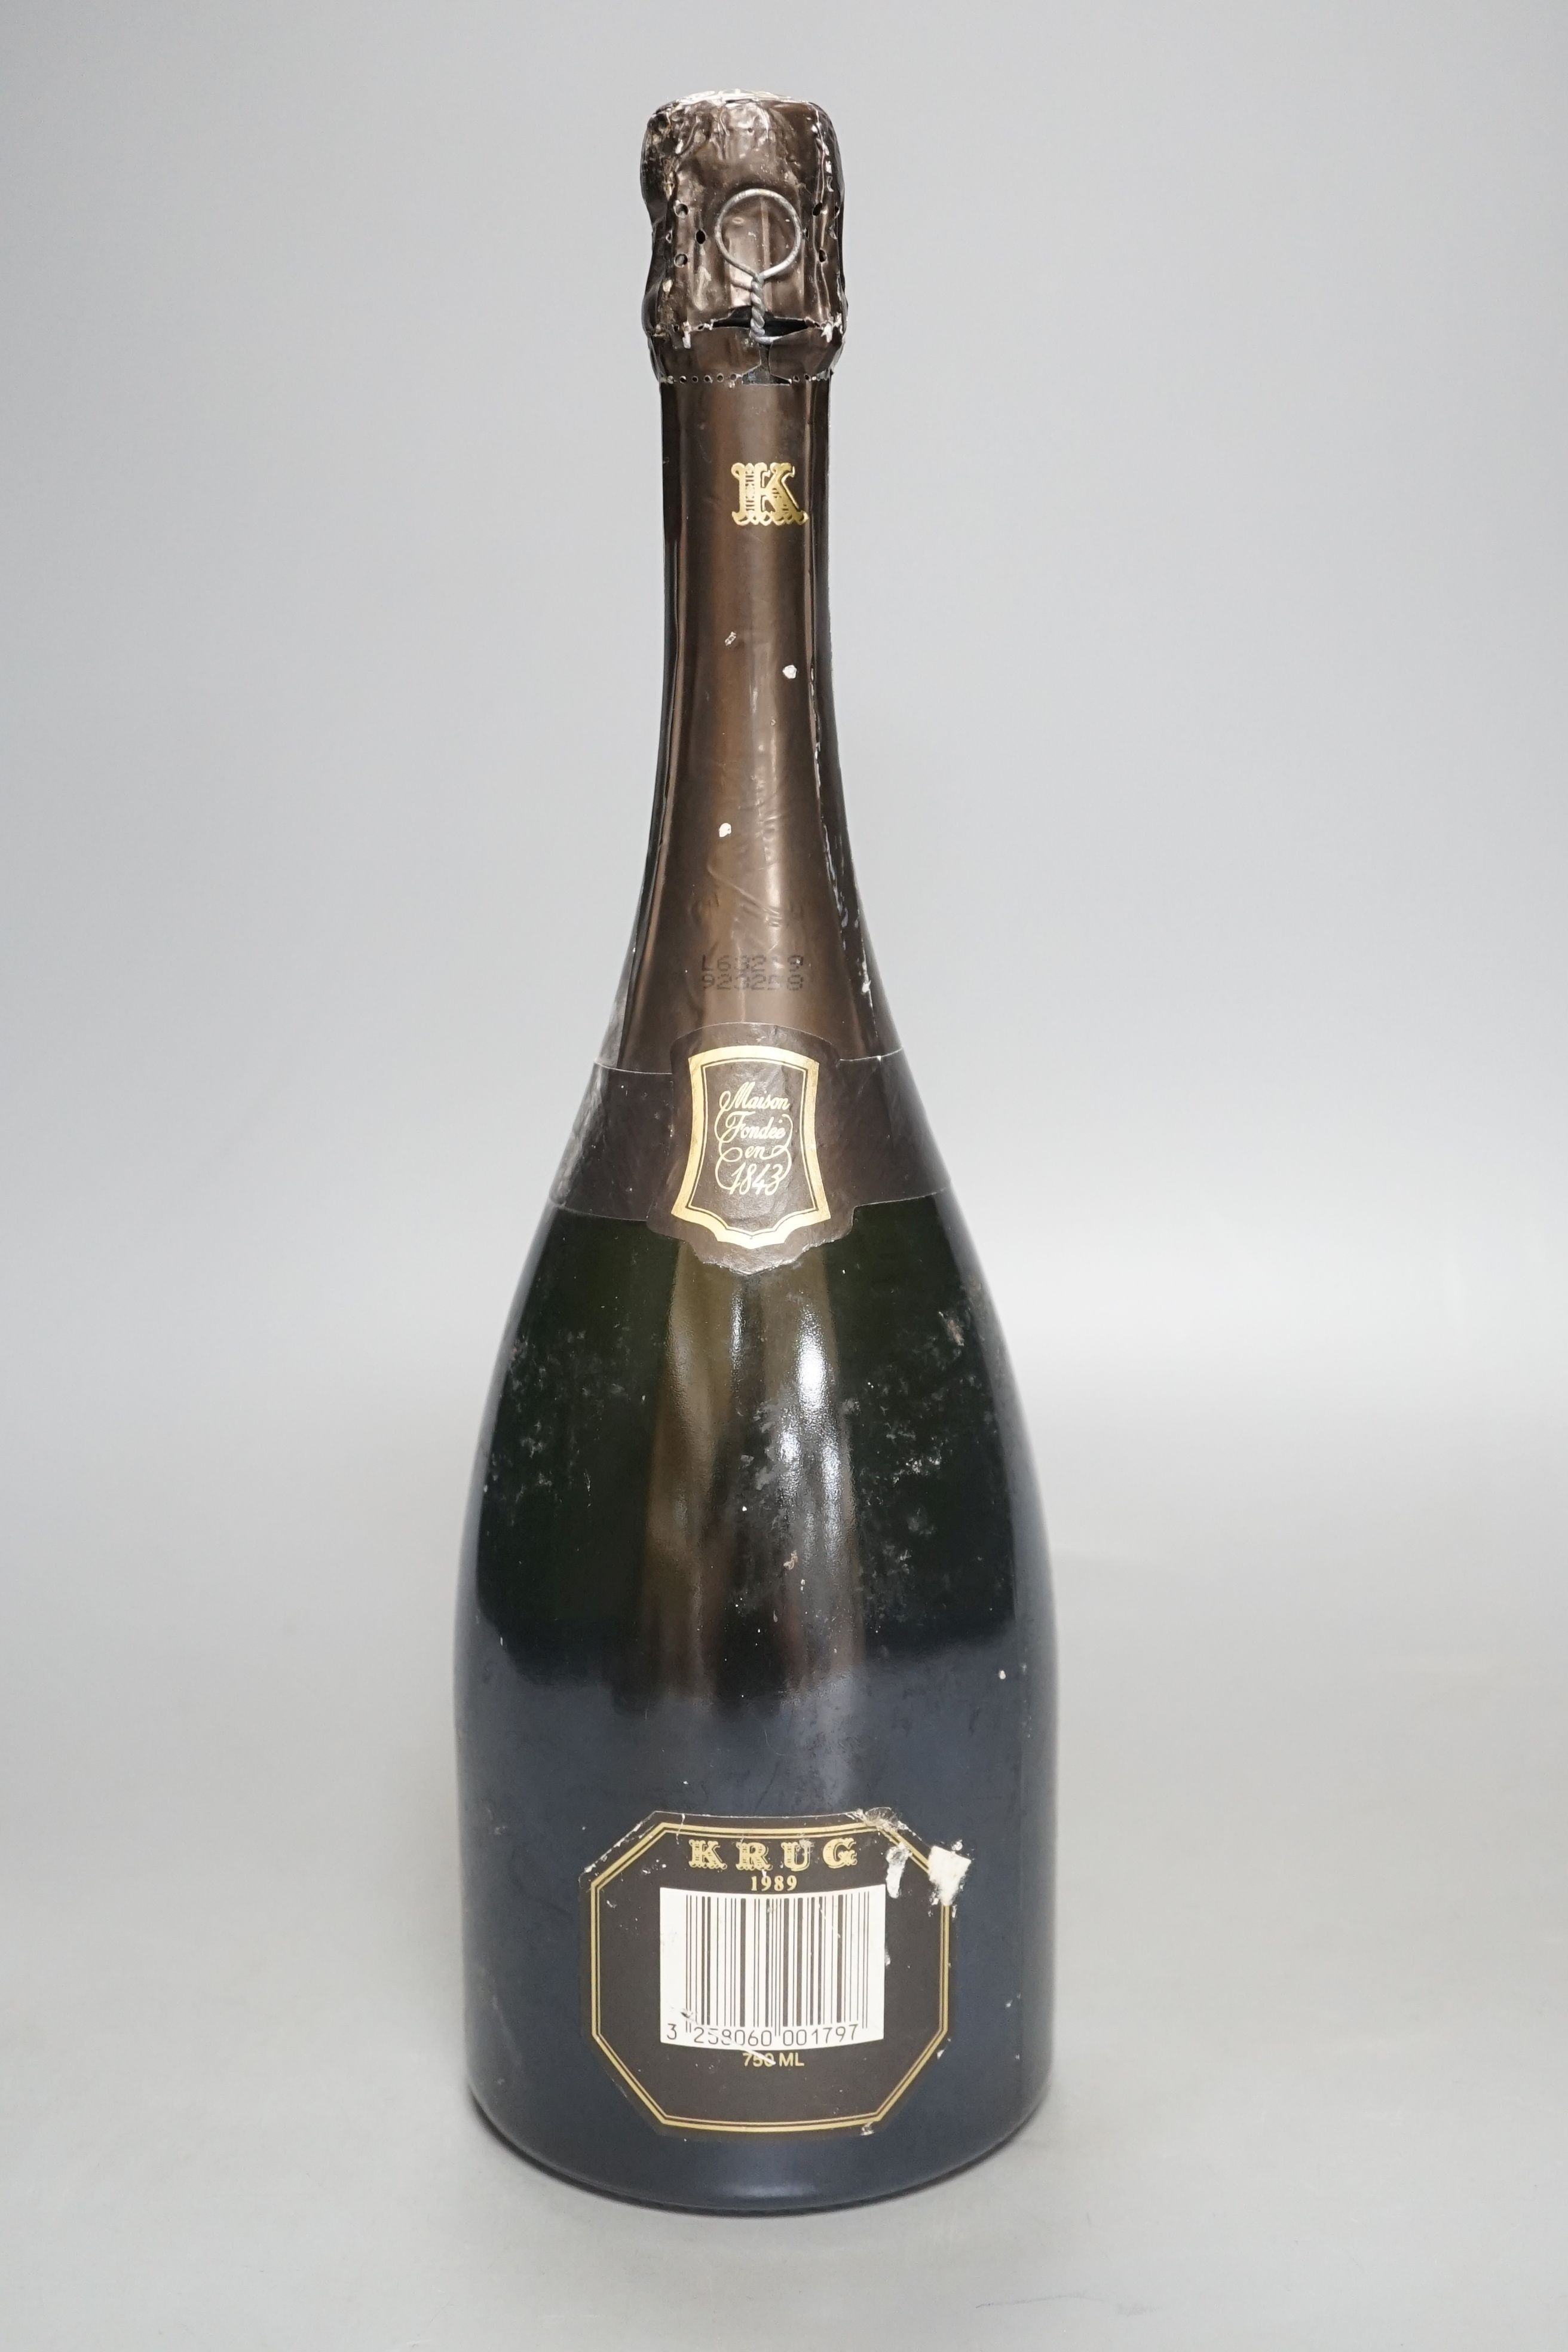 One bottle of Champagne Krug, 1989